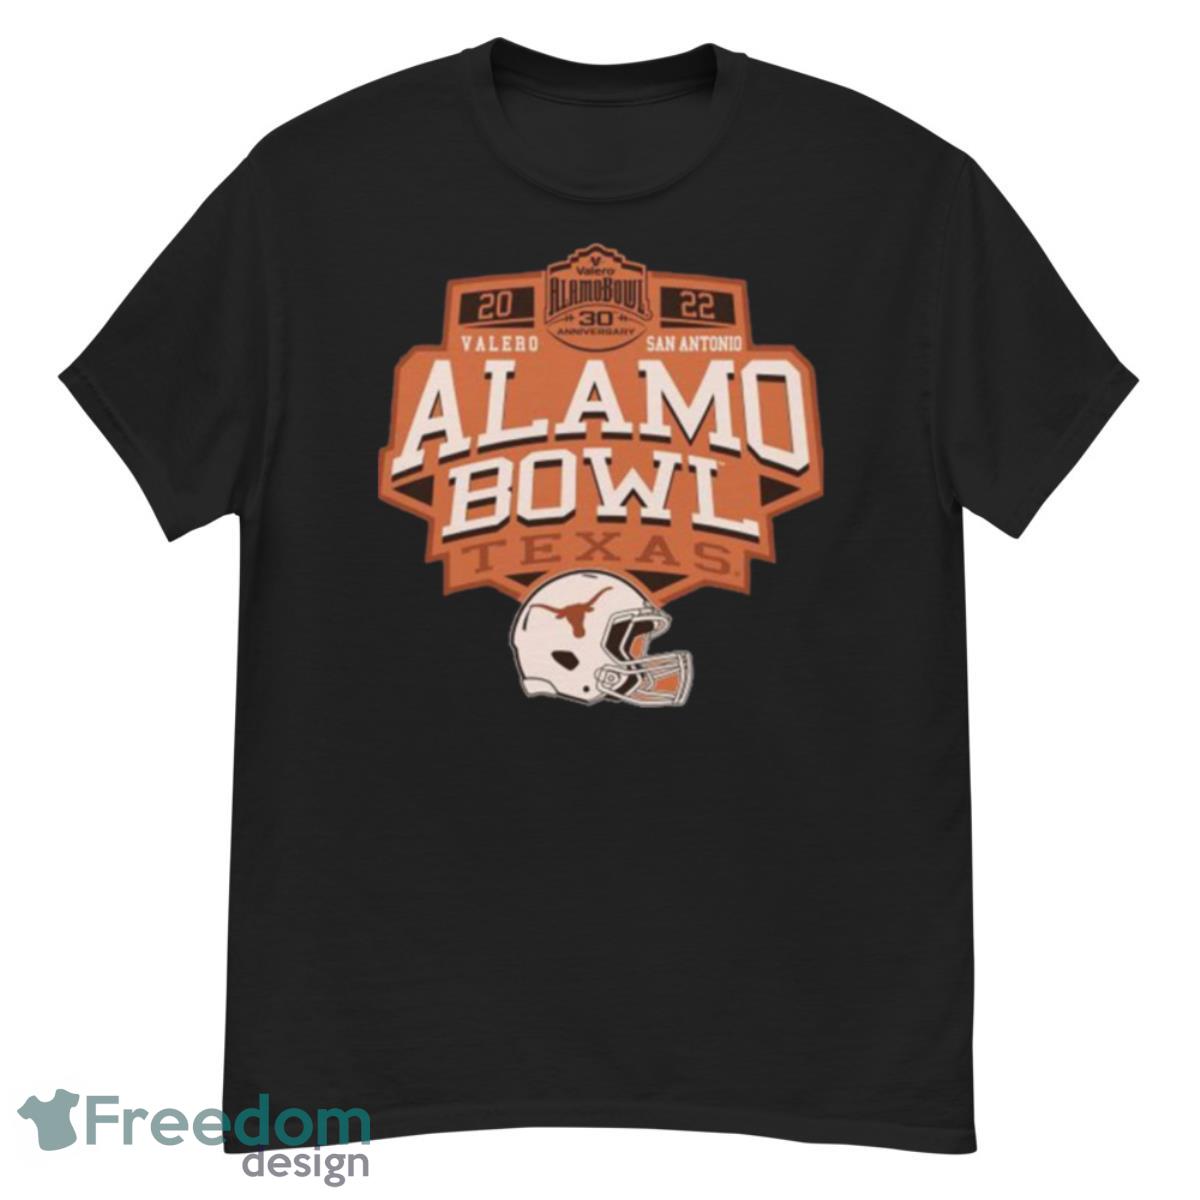 2022 Valero Alamo Bowl Texas Longhorn football shirt - G500 Men’s Classic T-Shirt